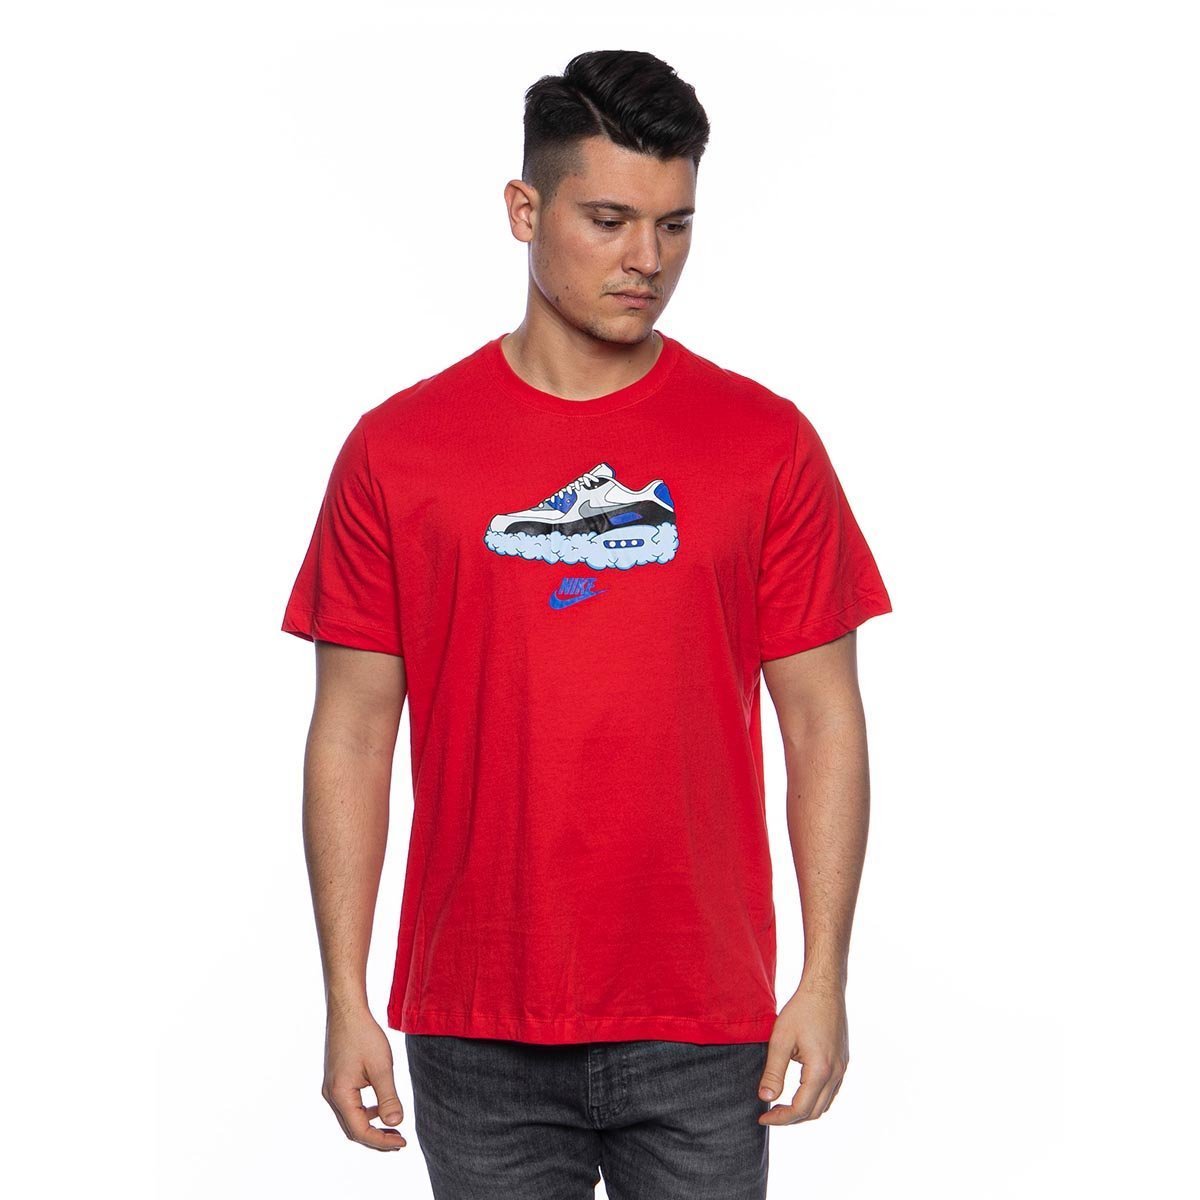 Nike Air Max 90 T-shirt red | Bludshop.com